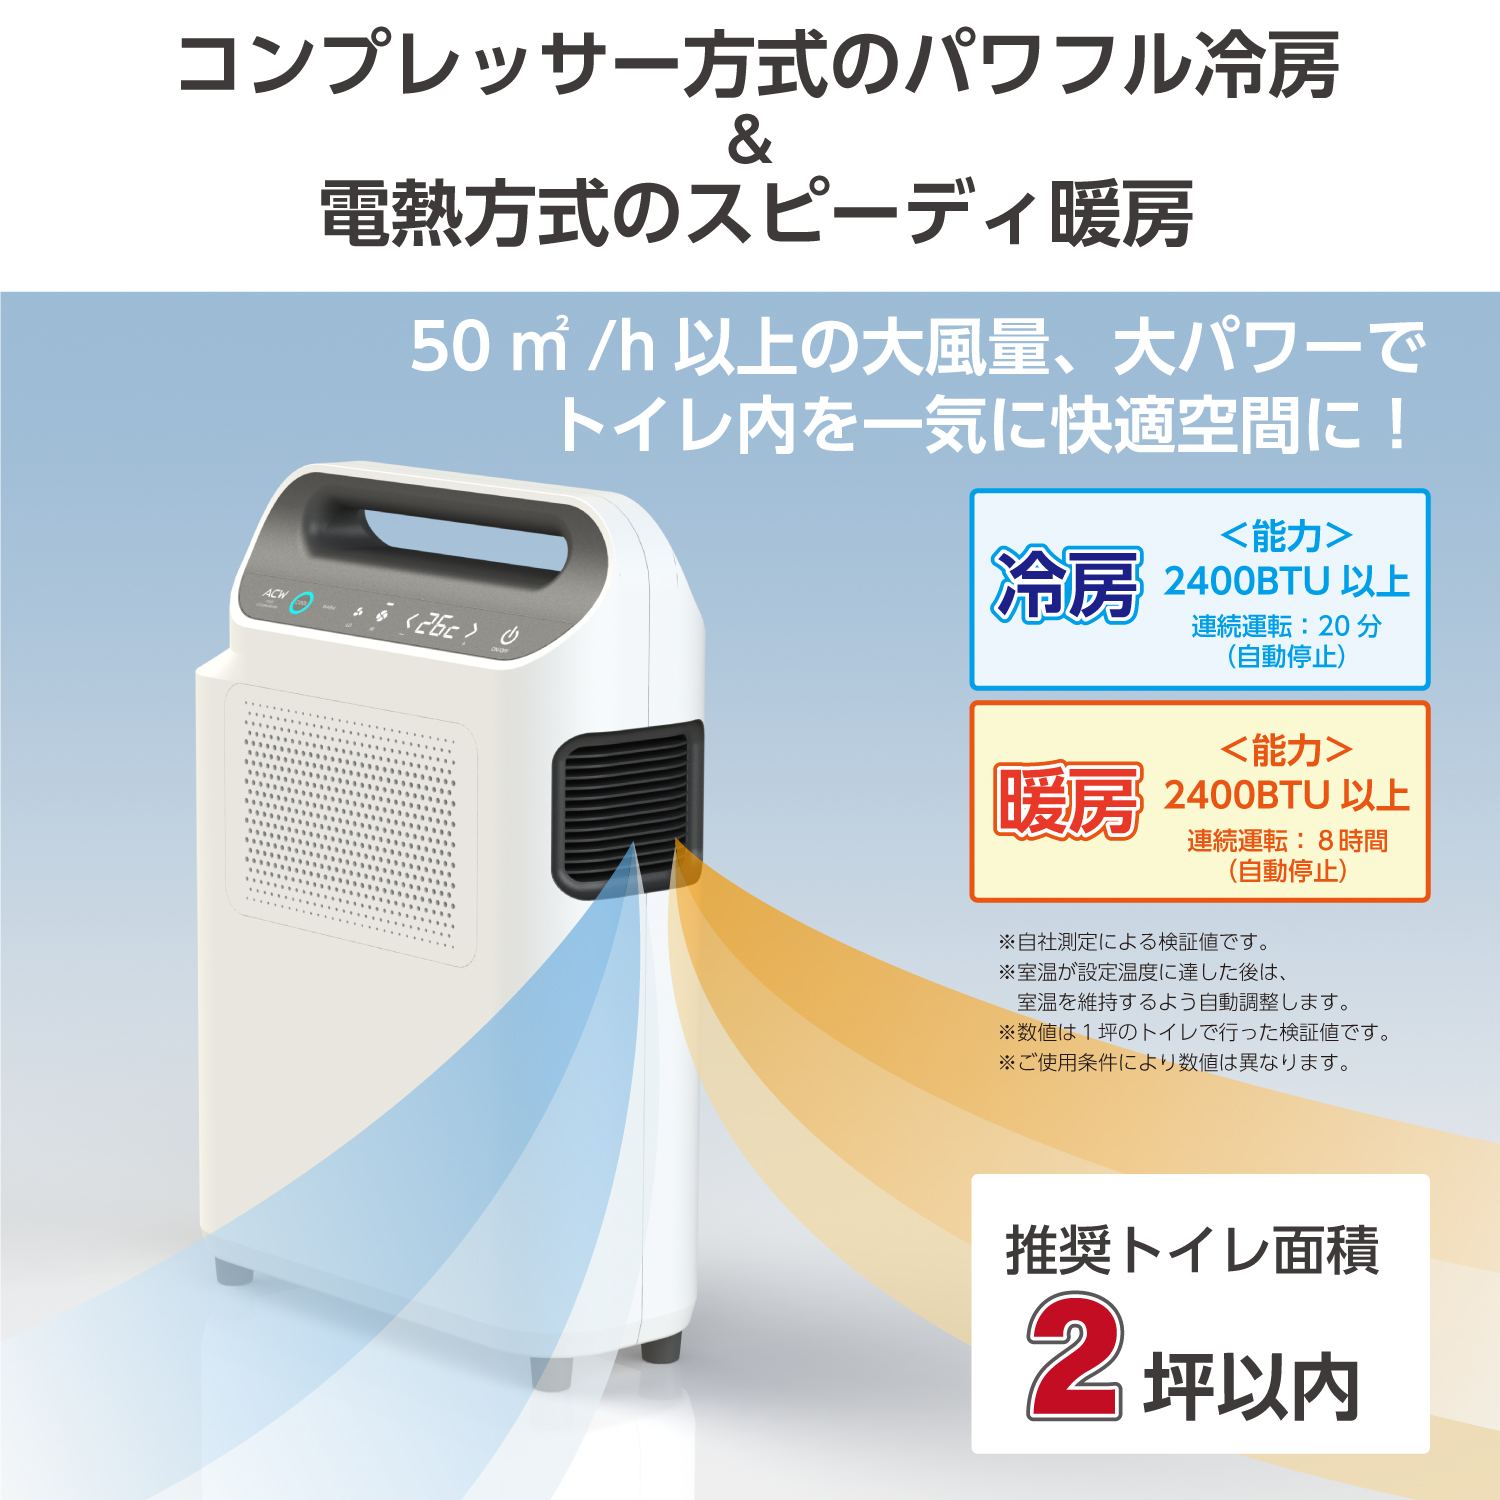 ACW トイレ用冷暖房エアコン A10-TA-208